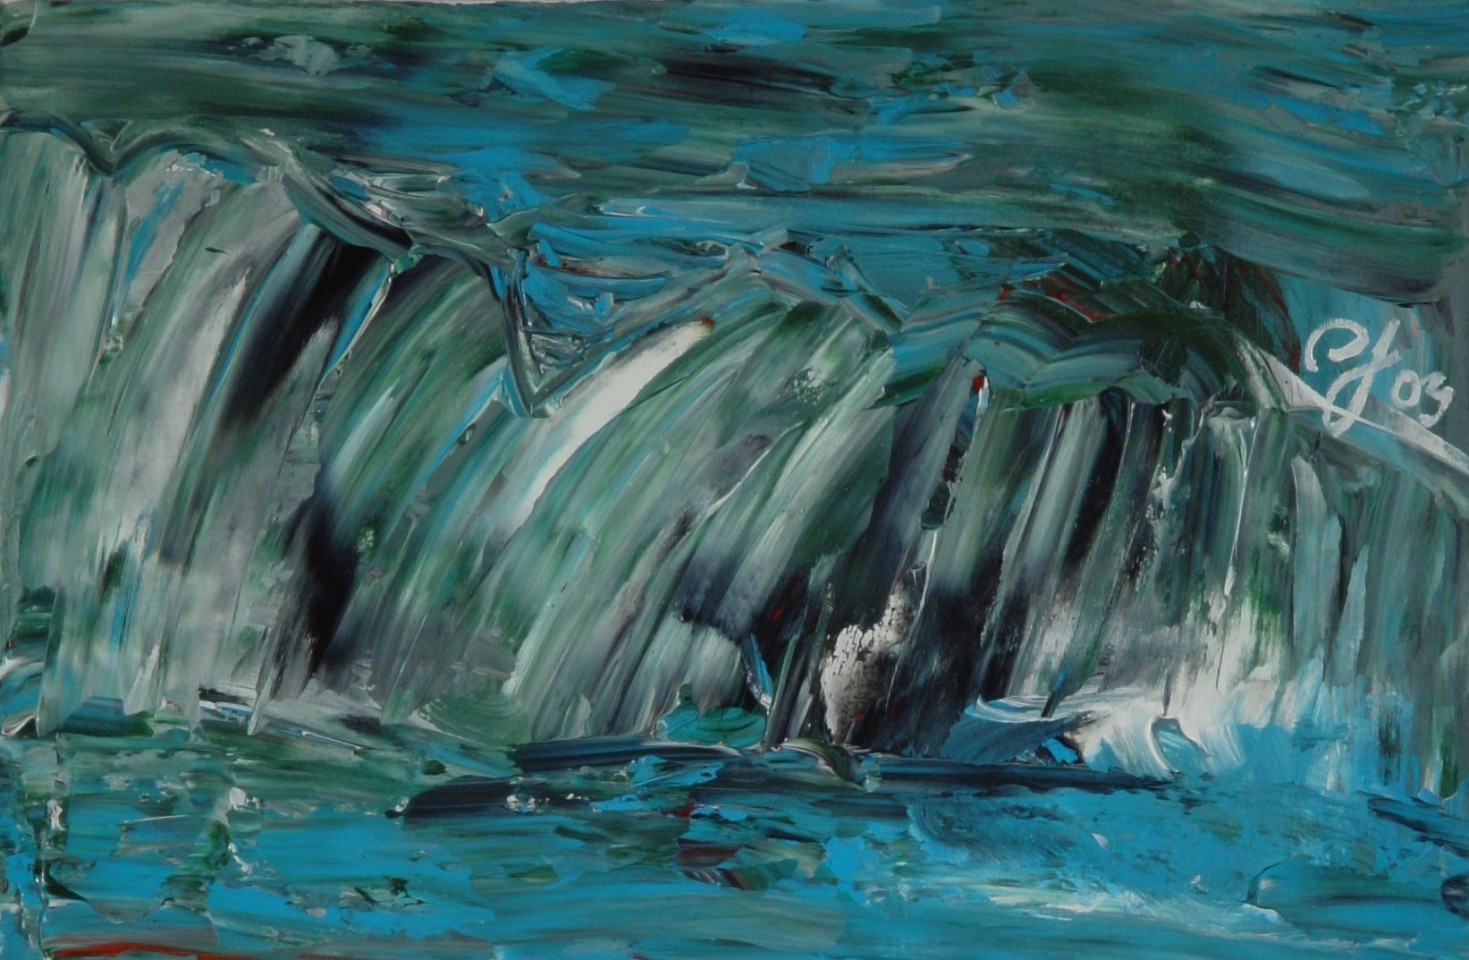 Diego Jacobson, Crocus Bay, 2003
Acrylic on Canvas, 14 x 22 in. (35.6 x 55.9 cm)
0354